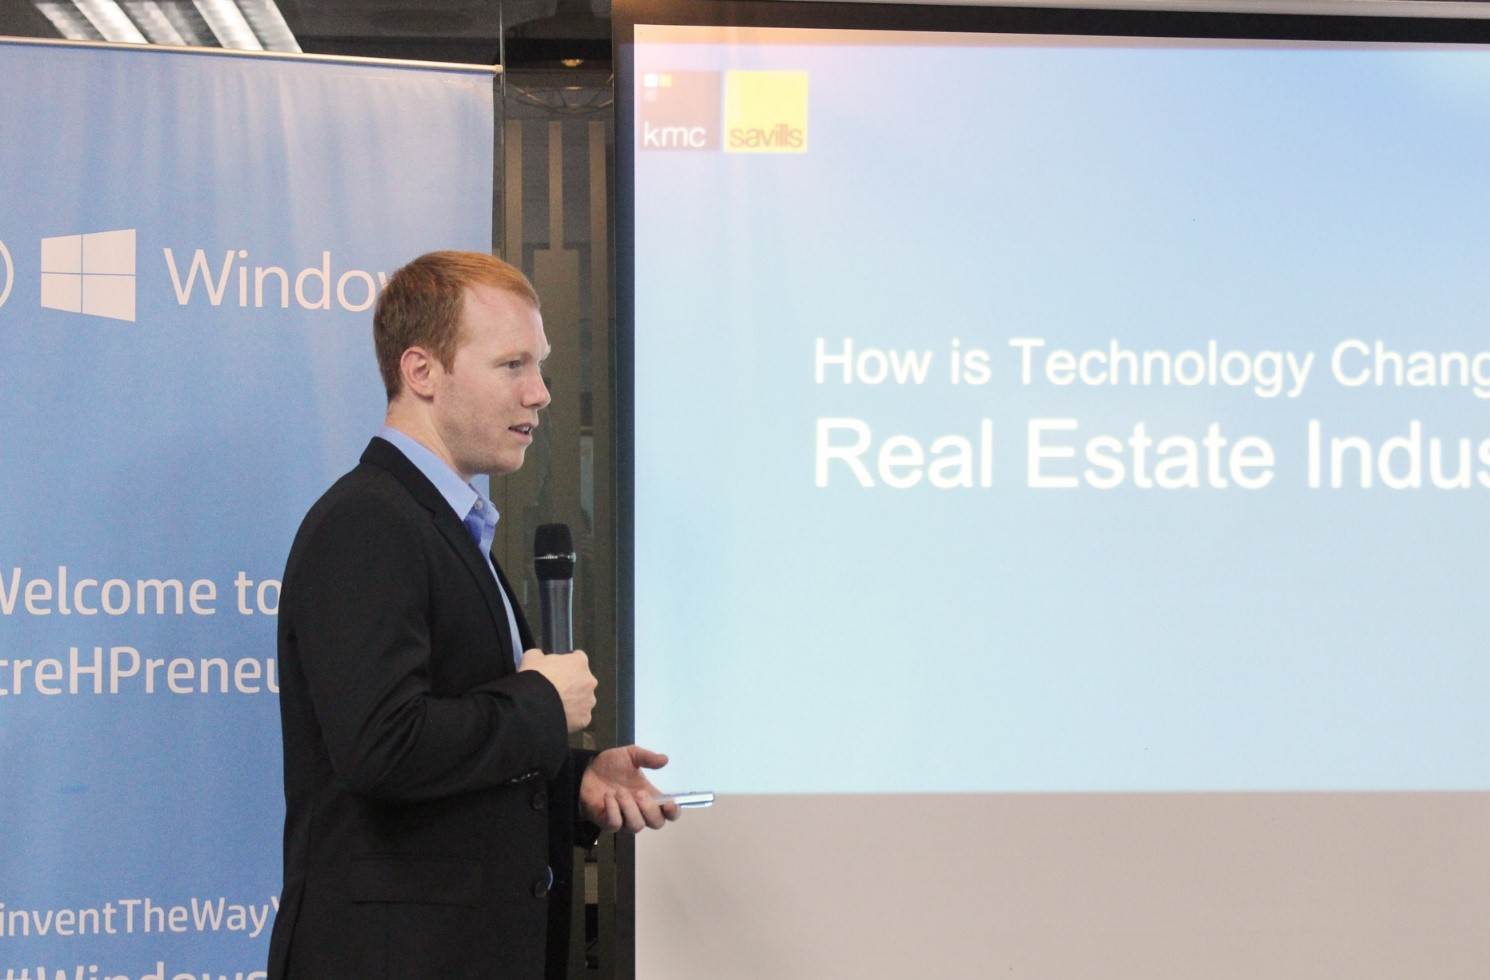 KMC Savills' Michael McCullough shares the digitization of Real Estate